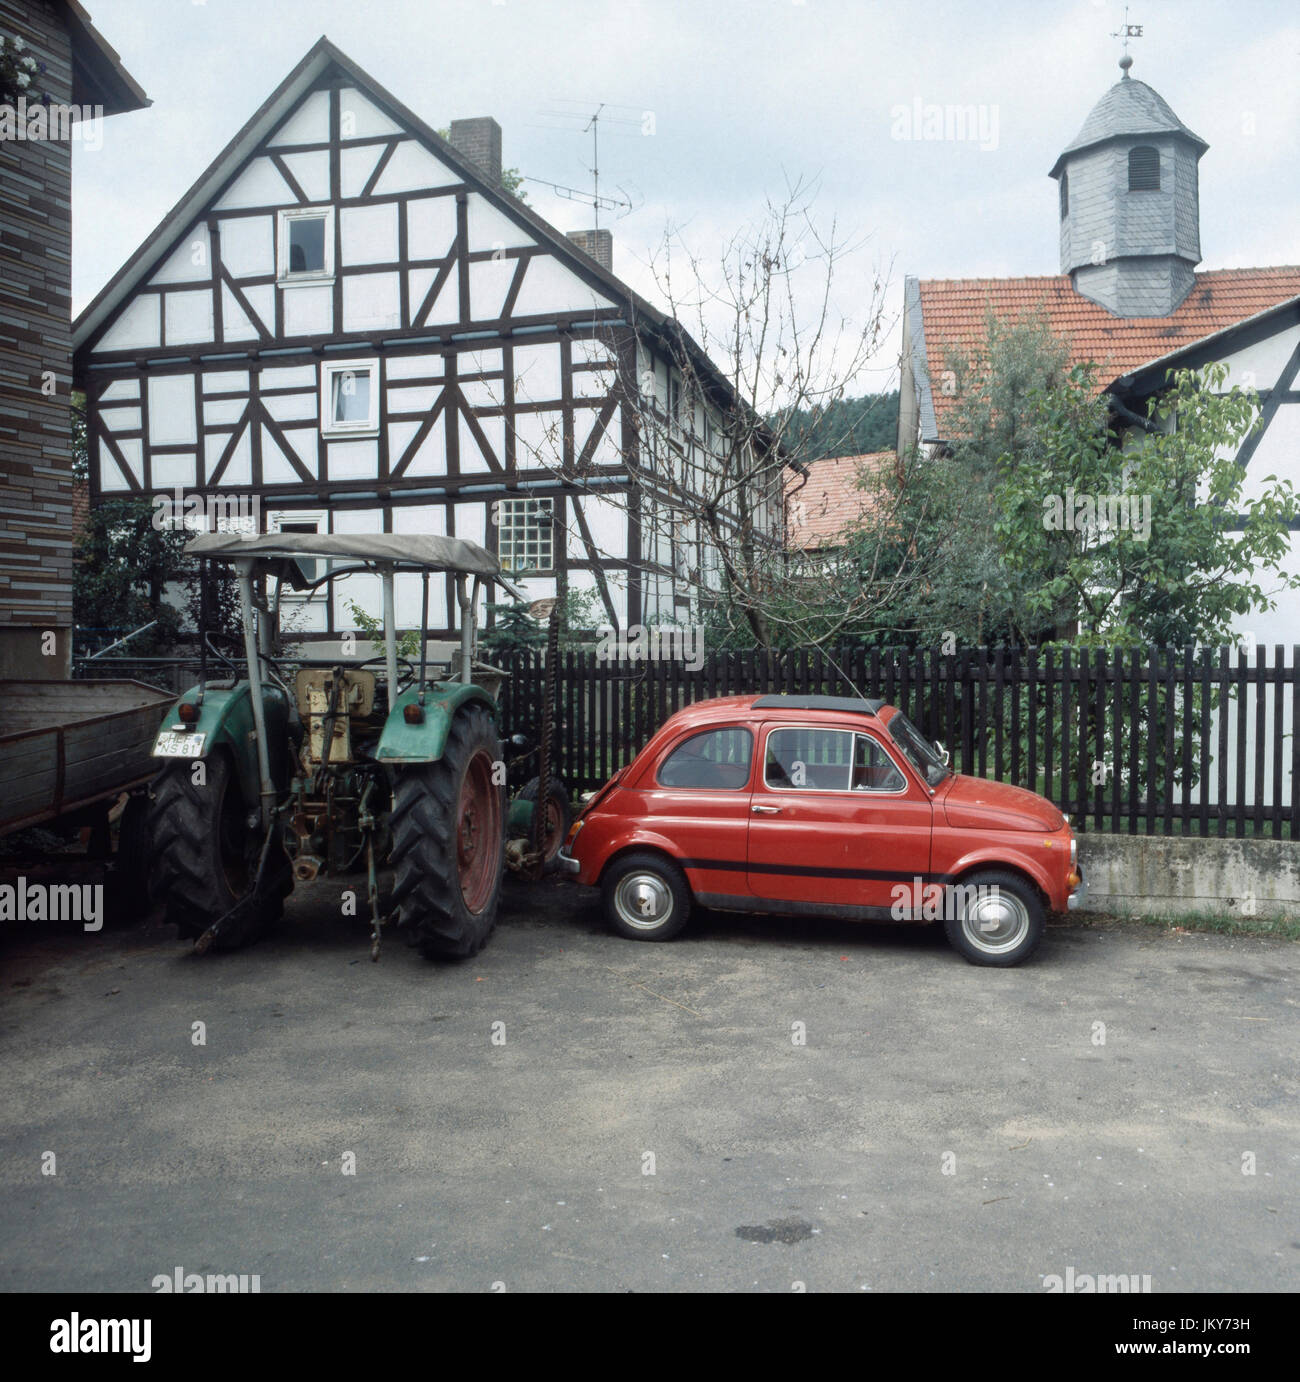 Fachwerkdorf Ascheberg Das im Nordosten Aue von Hessen, Allemagne des années 1980 er Jahre. Le village de Ascheberg Aue avec sa charpente de bois, de l'Allemagne des années 1980. Banque D'Images